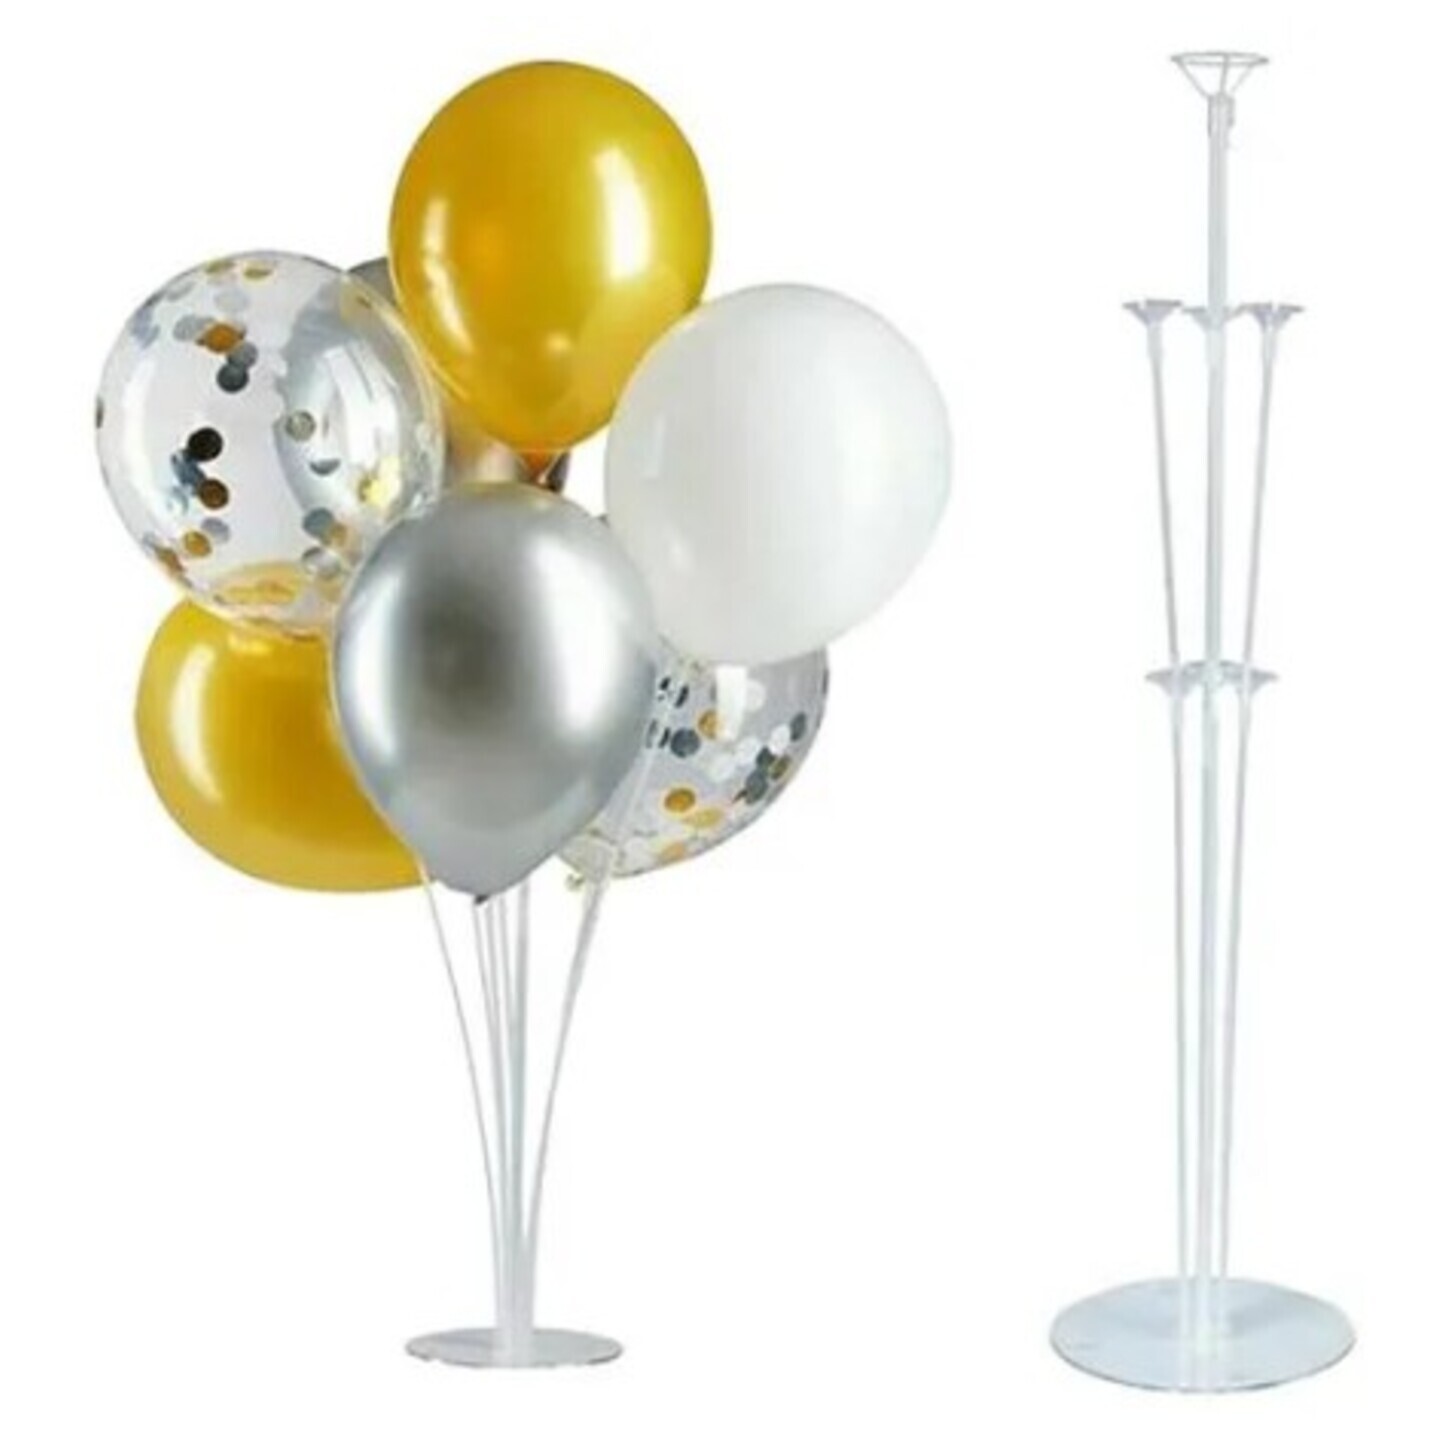 Table Balloon Display Kit